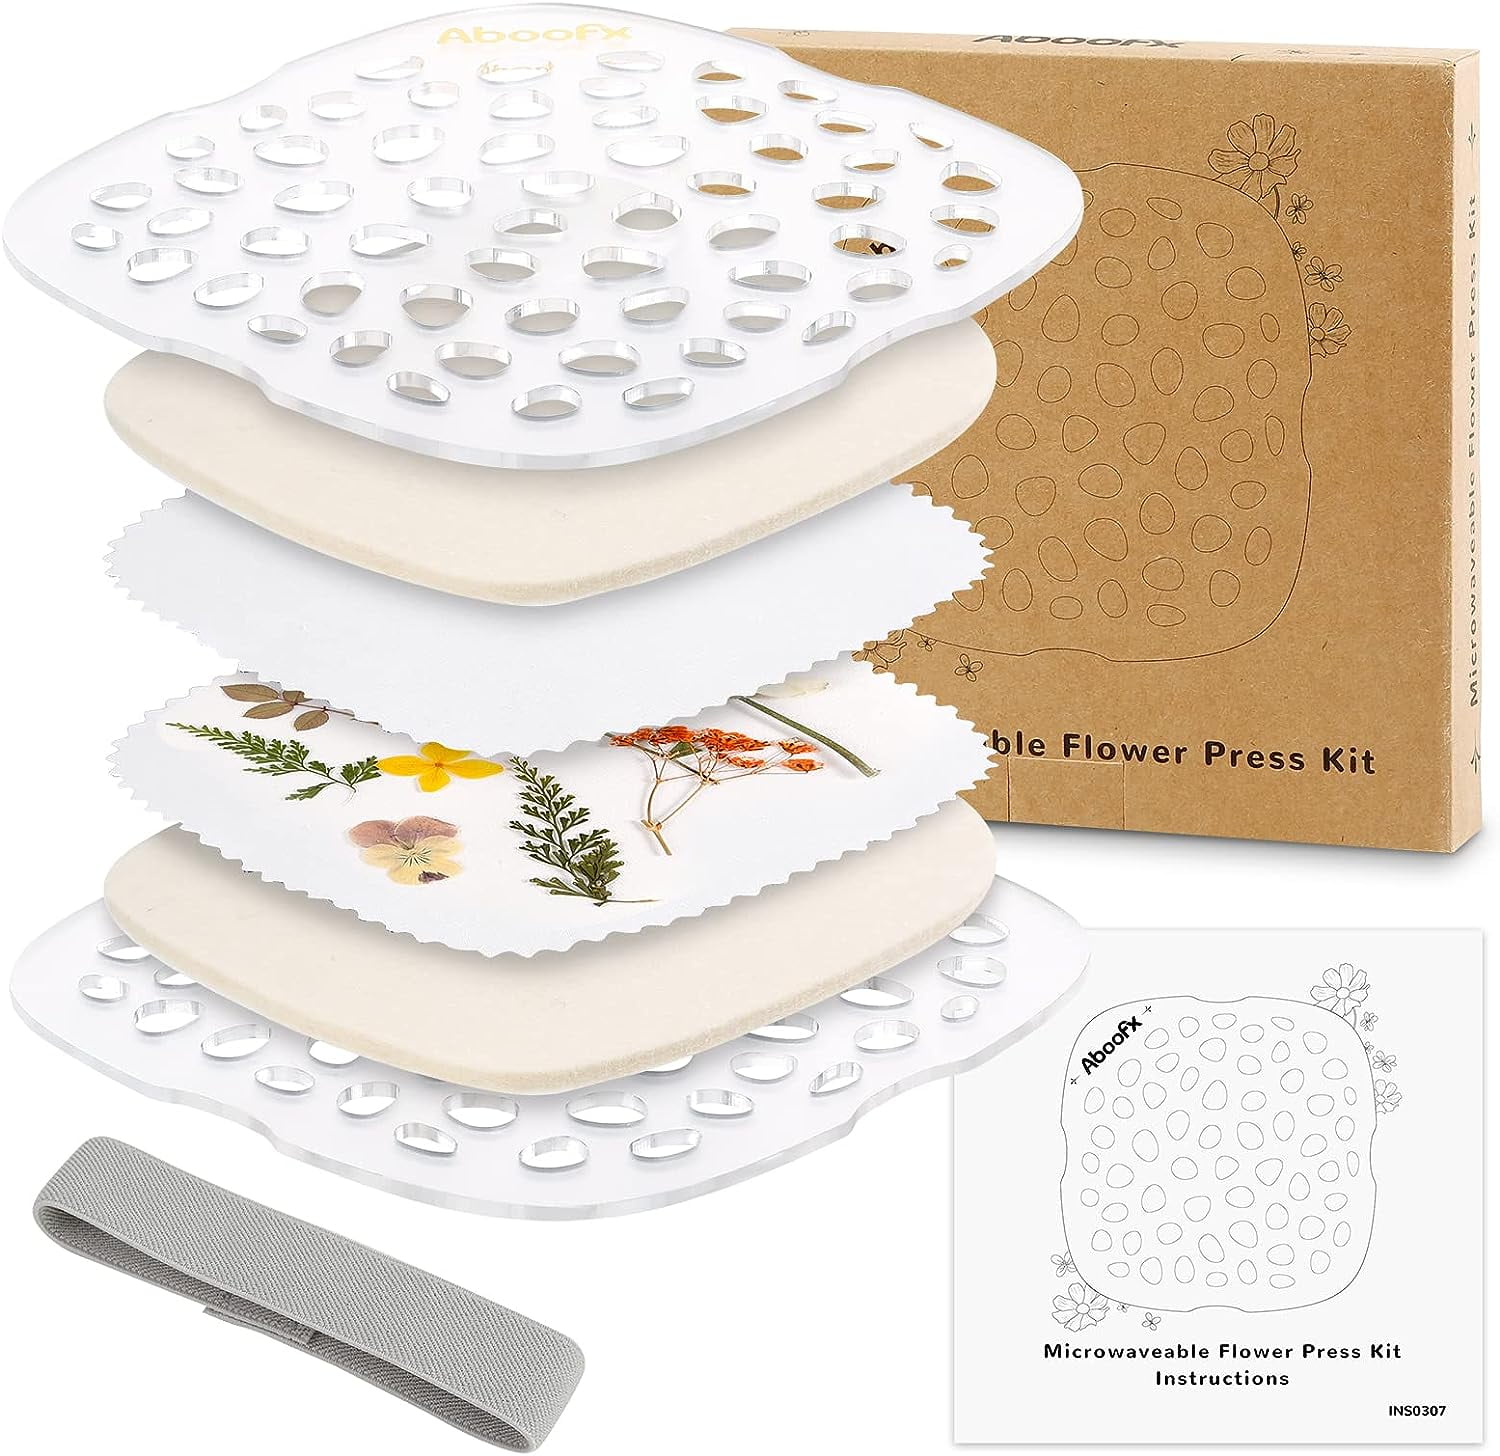 Suziko Flower Press, Professional Flower Press Kit - Flower Preservation Kit 6 Layers 6.3 x 8.3 inch Flower Pressing Kit for Adults Kids-Great Gift F